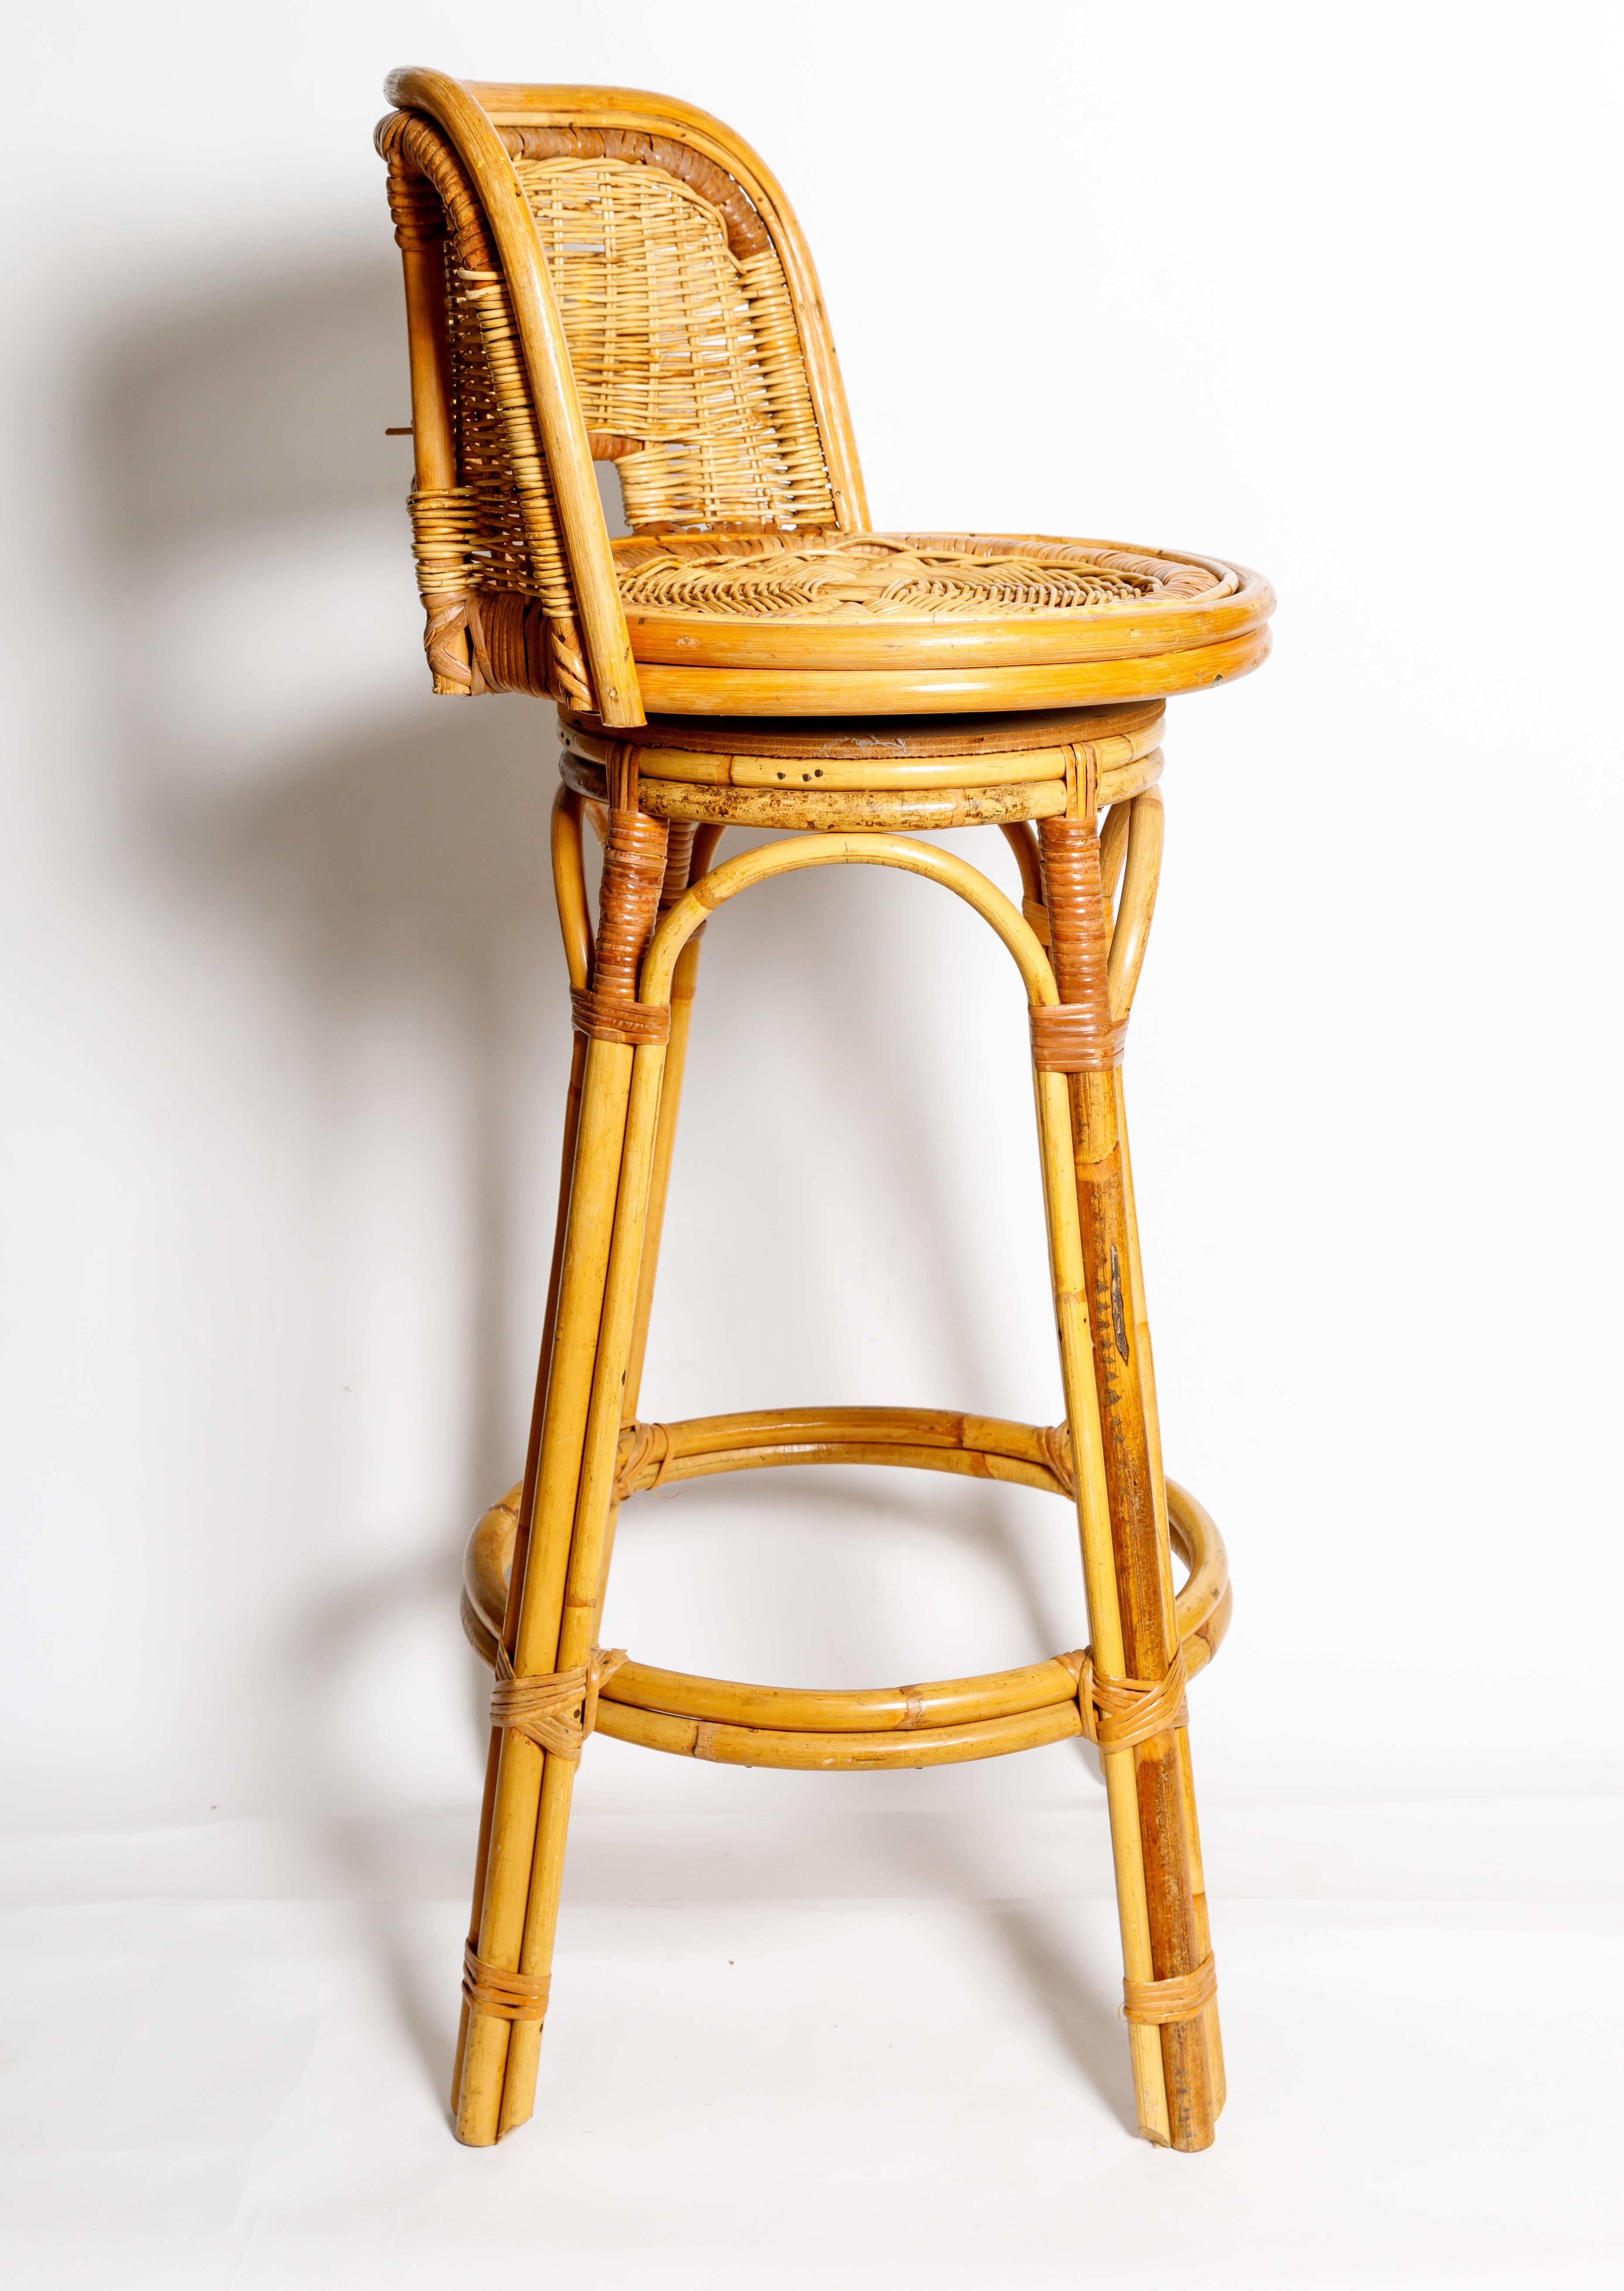 A set of three woven wicker swivel bar stools.